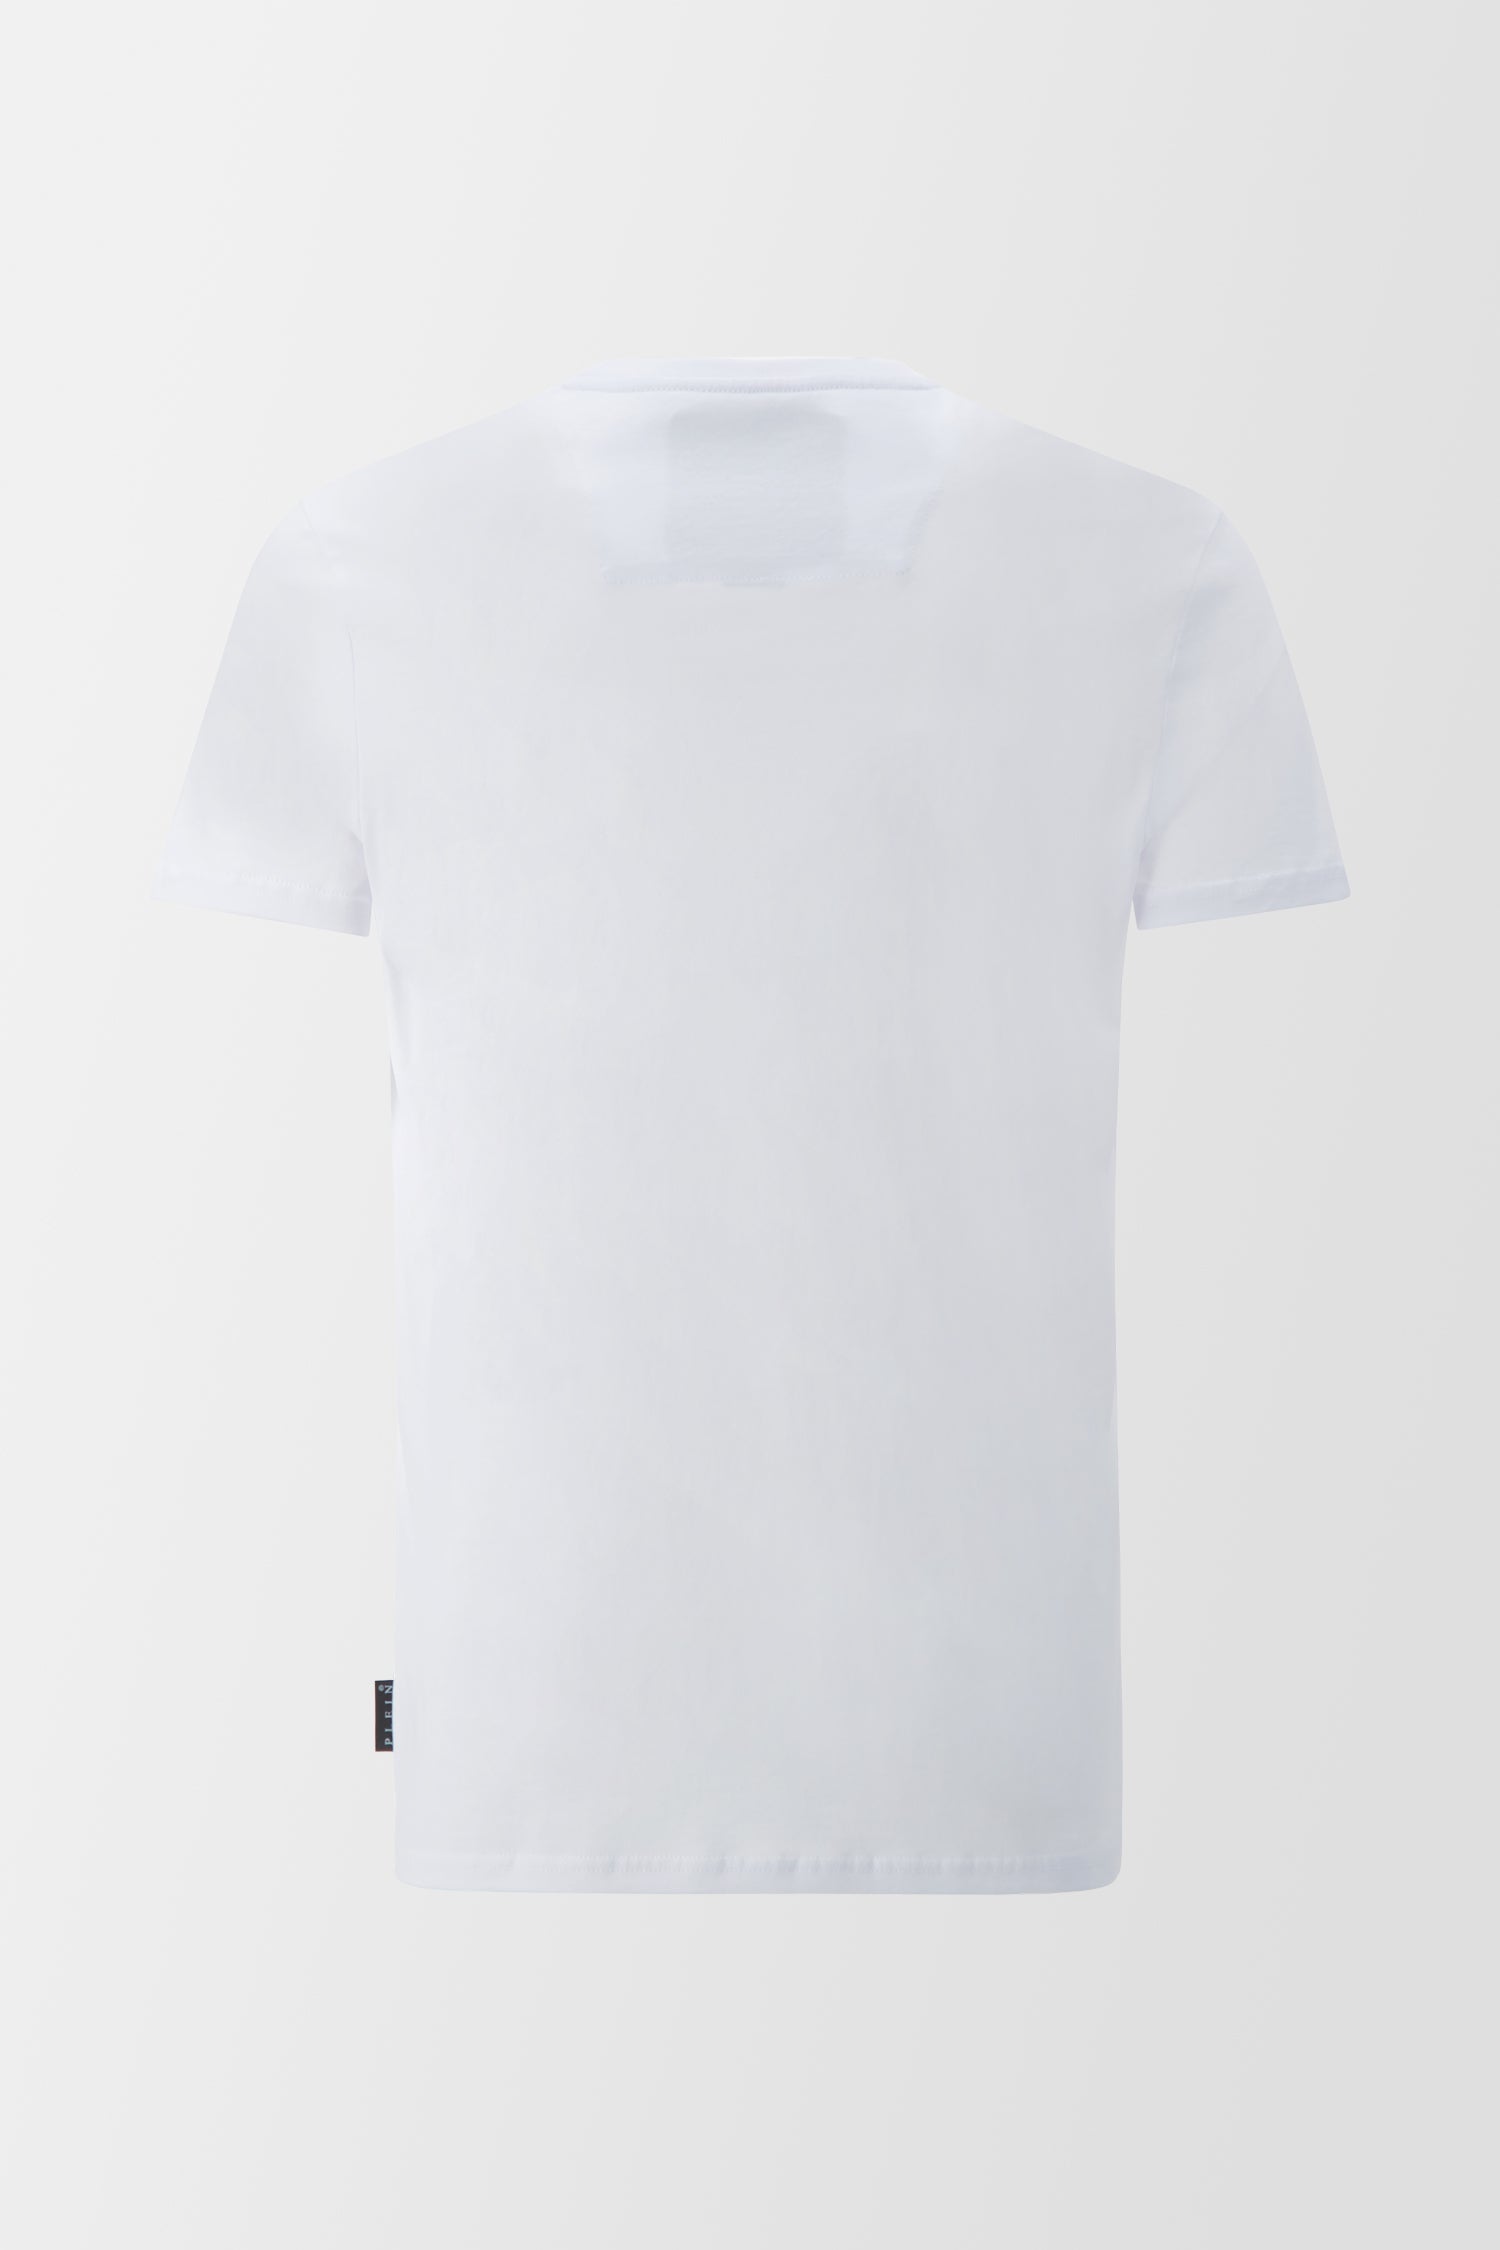 Philipp Plein White Round Neck SS Istitutional T-Shirt